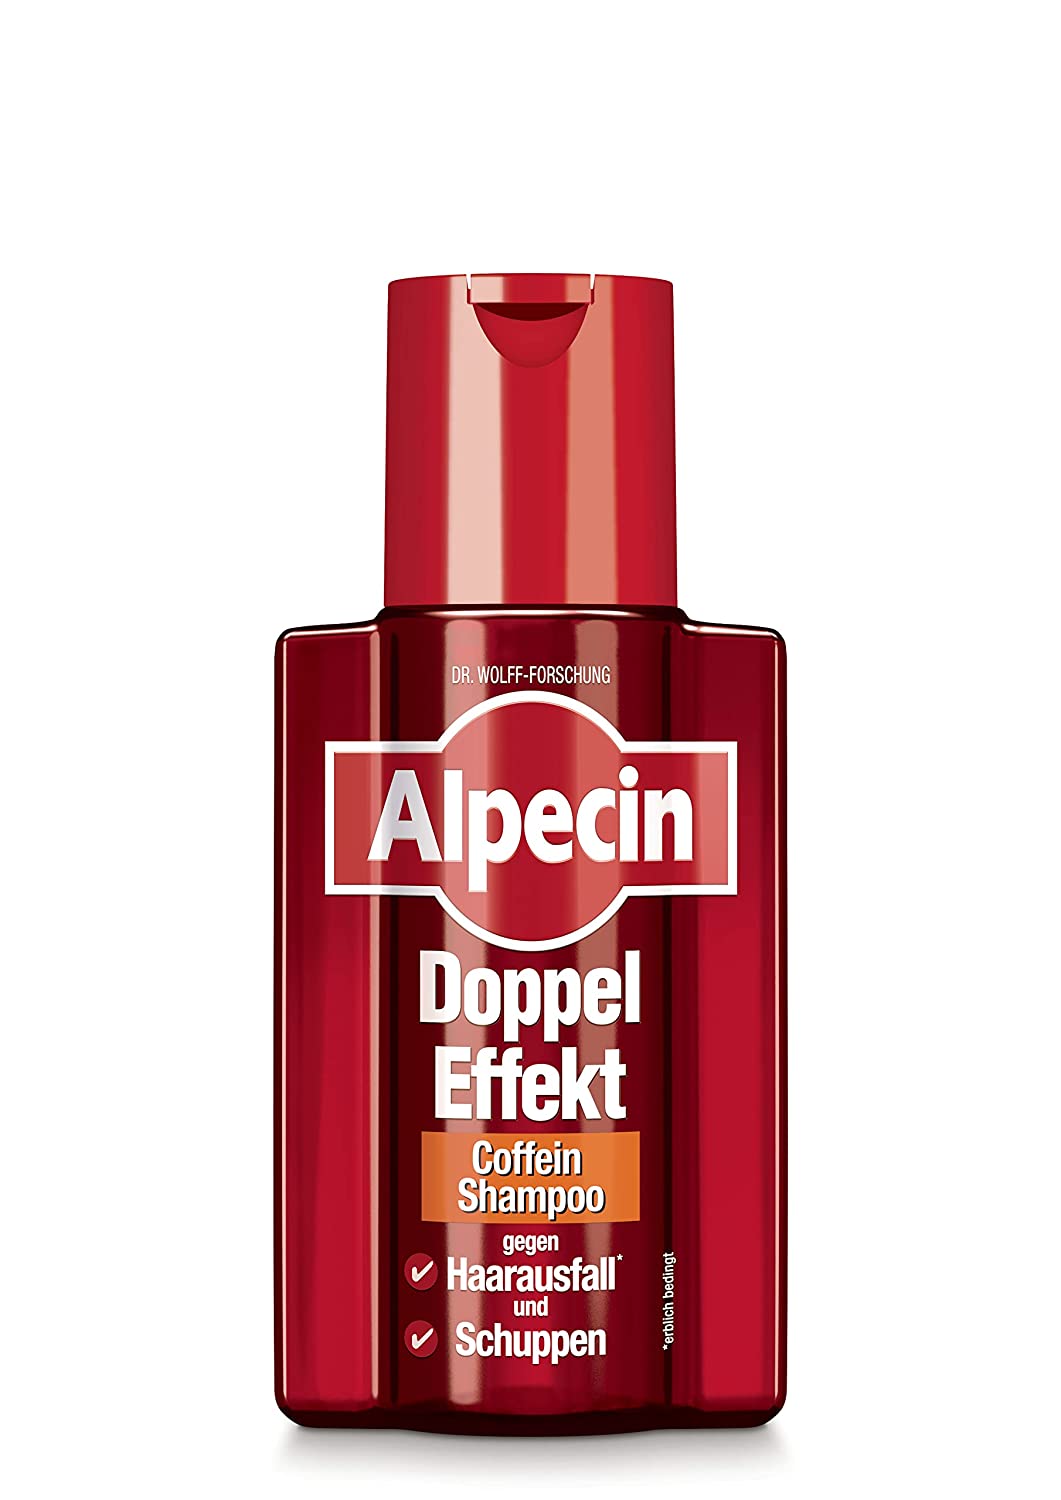 Alpecin Double Effect Caffeine Shampoo 1 x 200ml - Against Hereditary Hair Loss and Dandruff